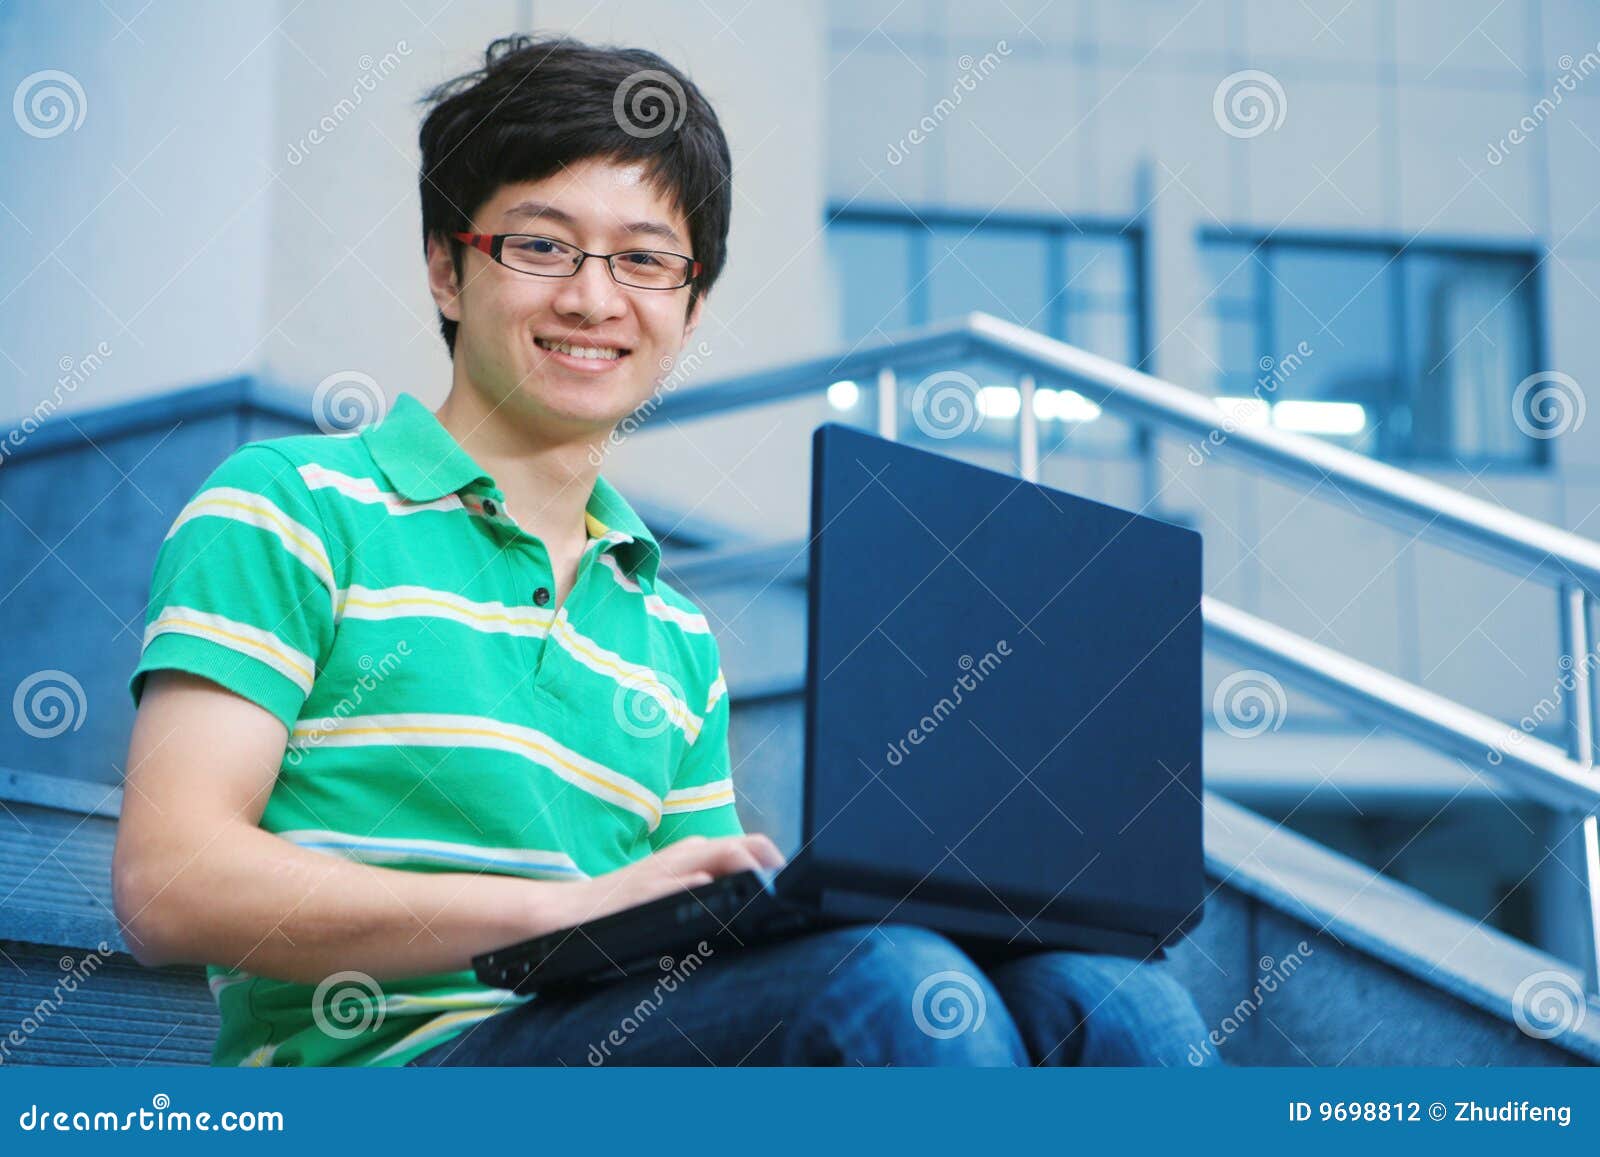 student-boy-laptop-9698812.jpg